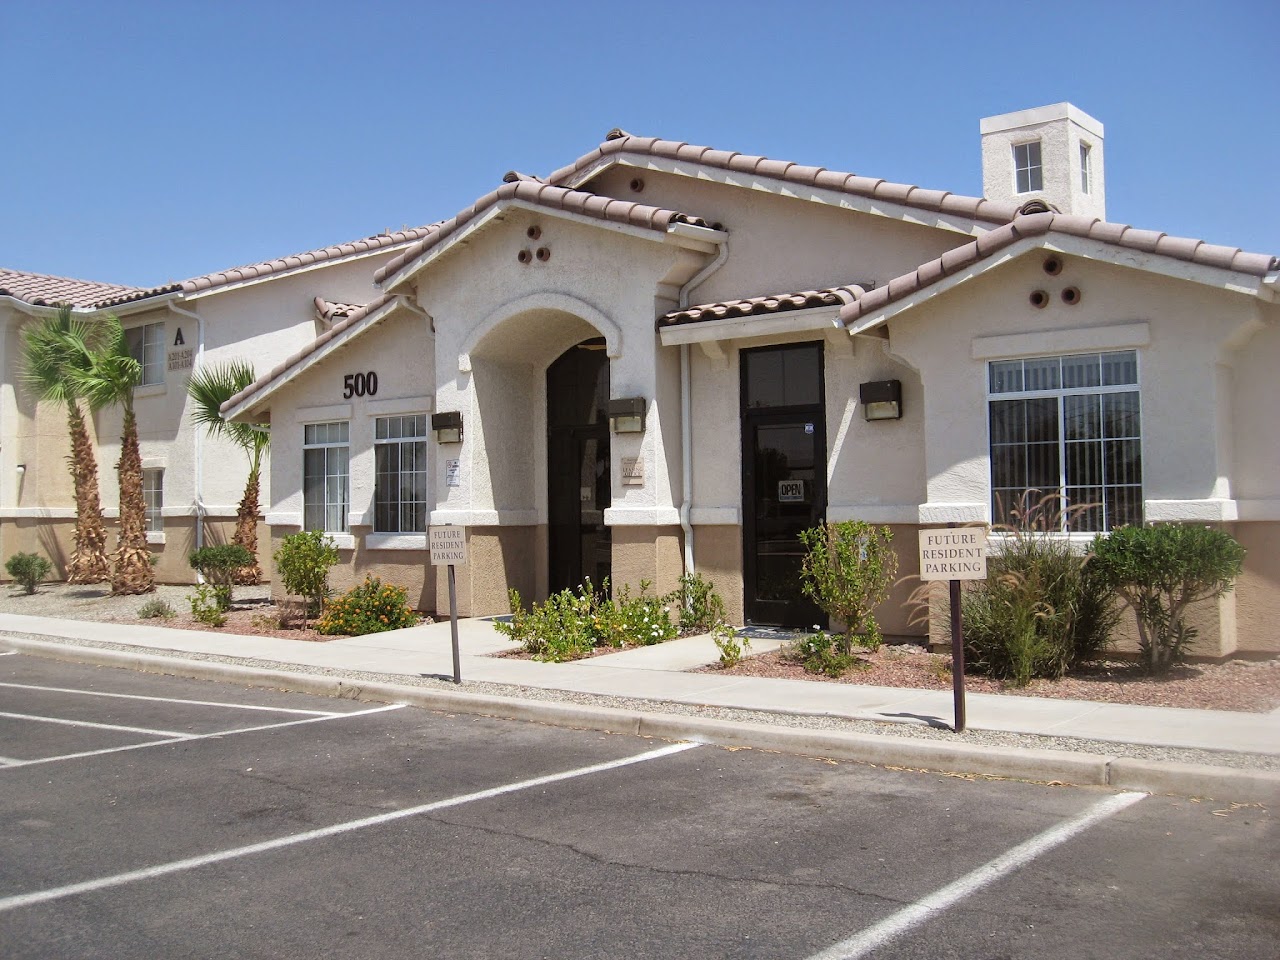 Photo of SOMERTON APTS. Affordable housing located at 500 N SOMERTON AVE SOMERTON, AZ 85350